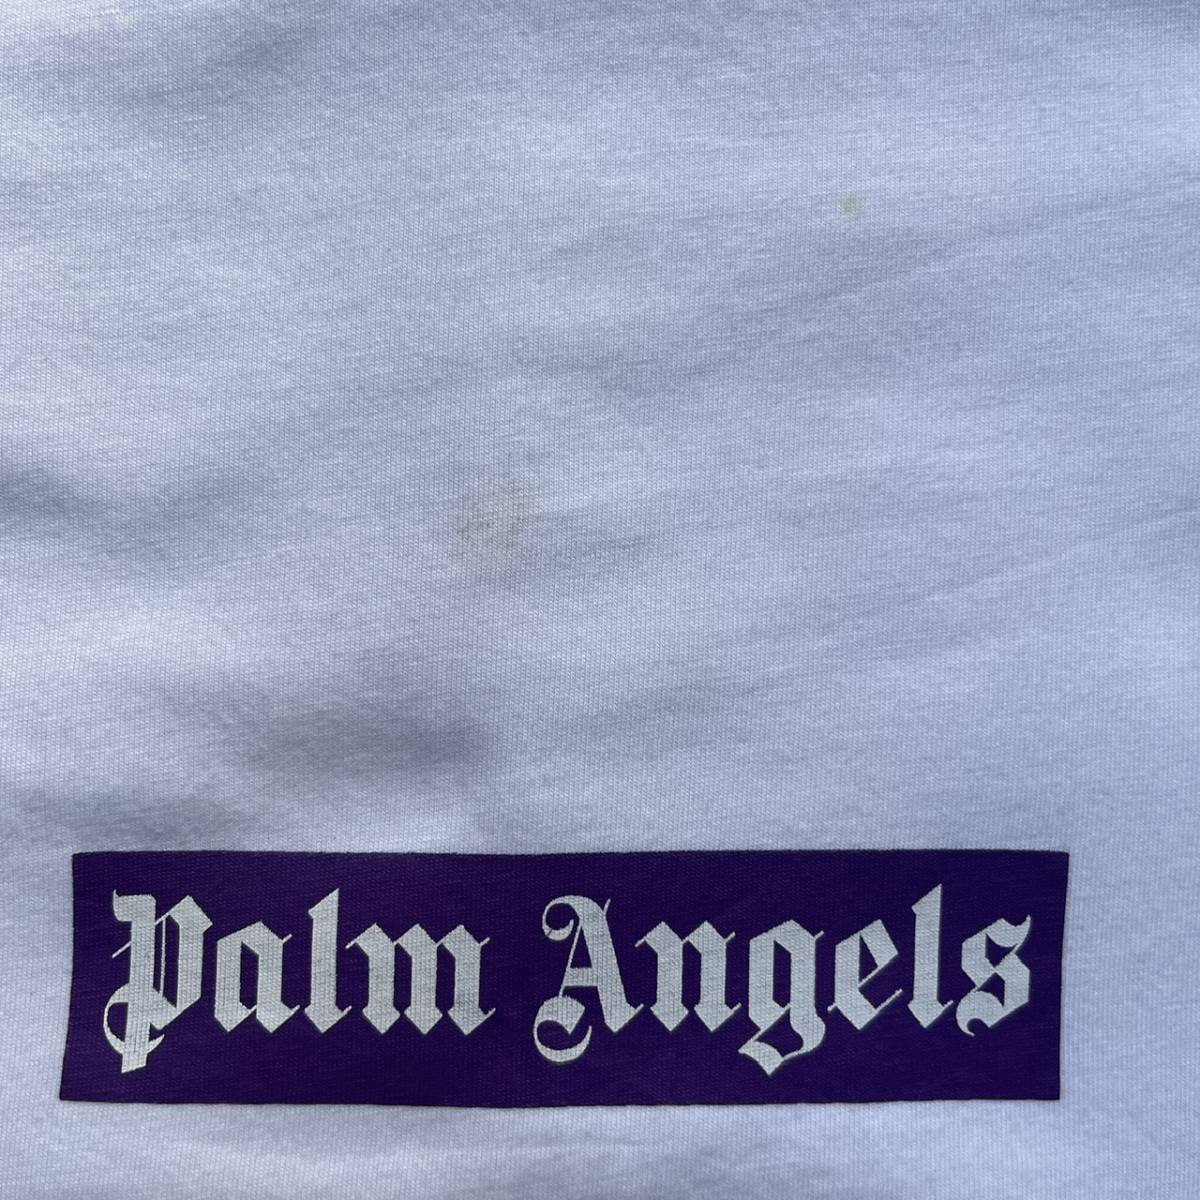 Palm Angels パームエンジェルス XLサイズ Tシャツ ボックスロゴ ロゴ 半袖 ホワイト